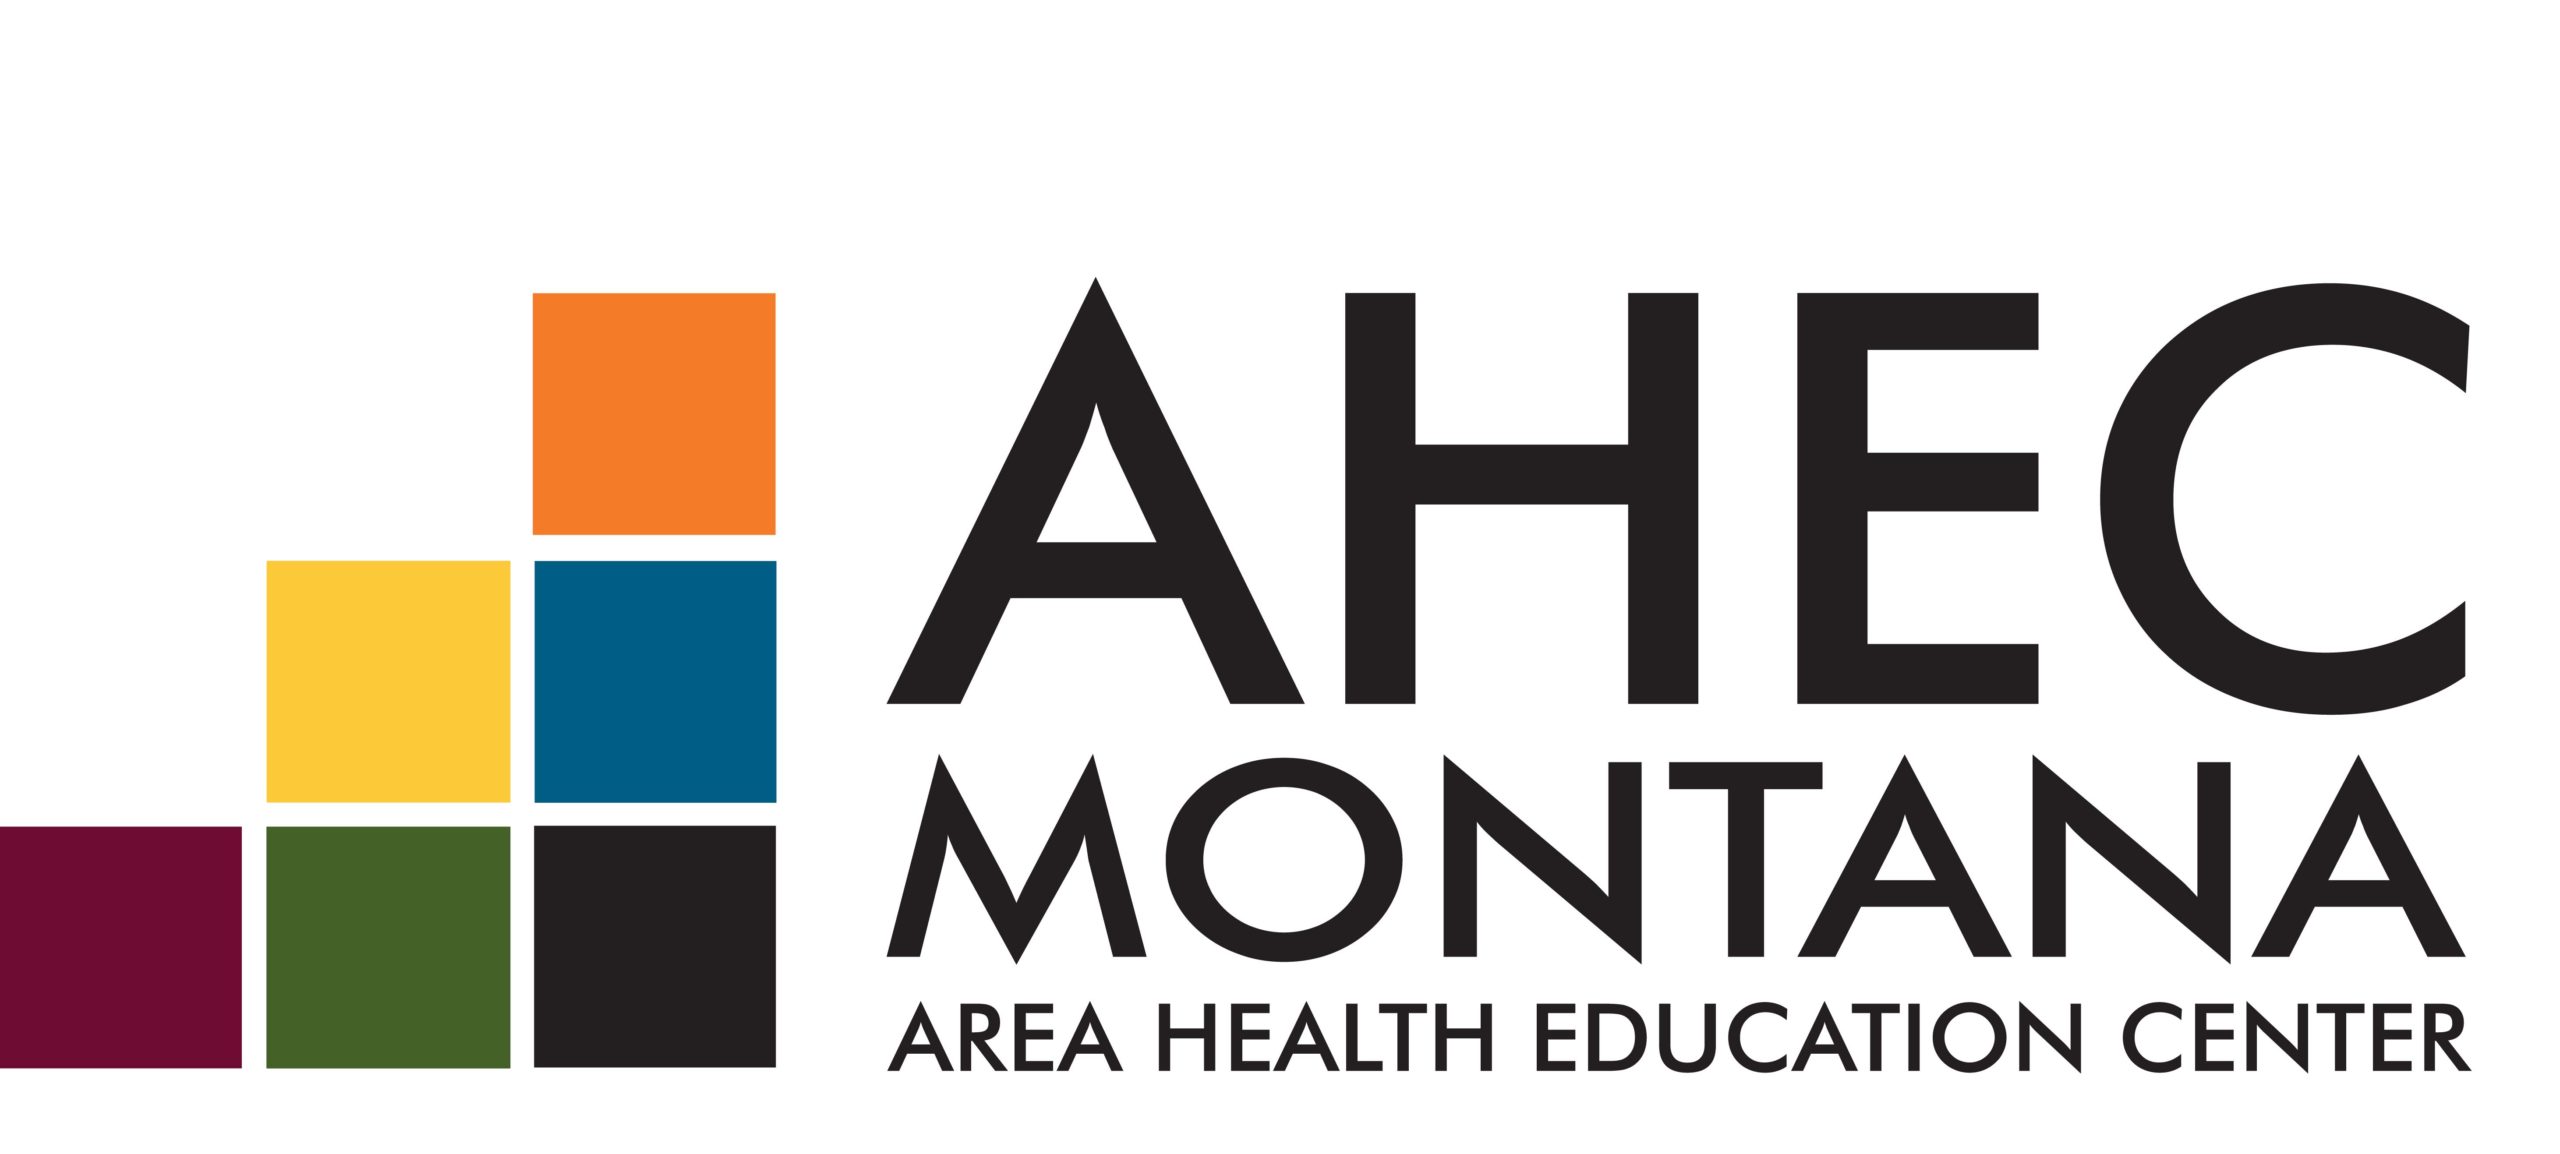 Montana Area Health Education Center